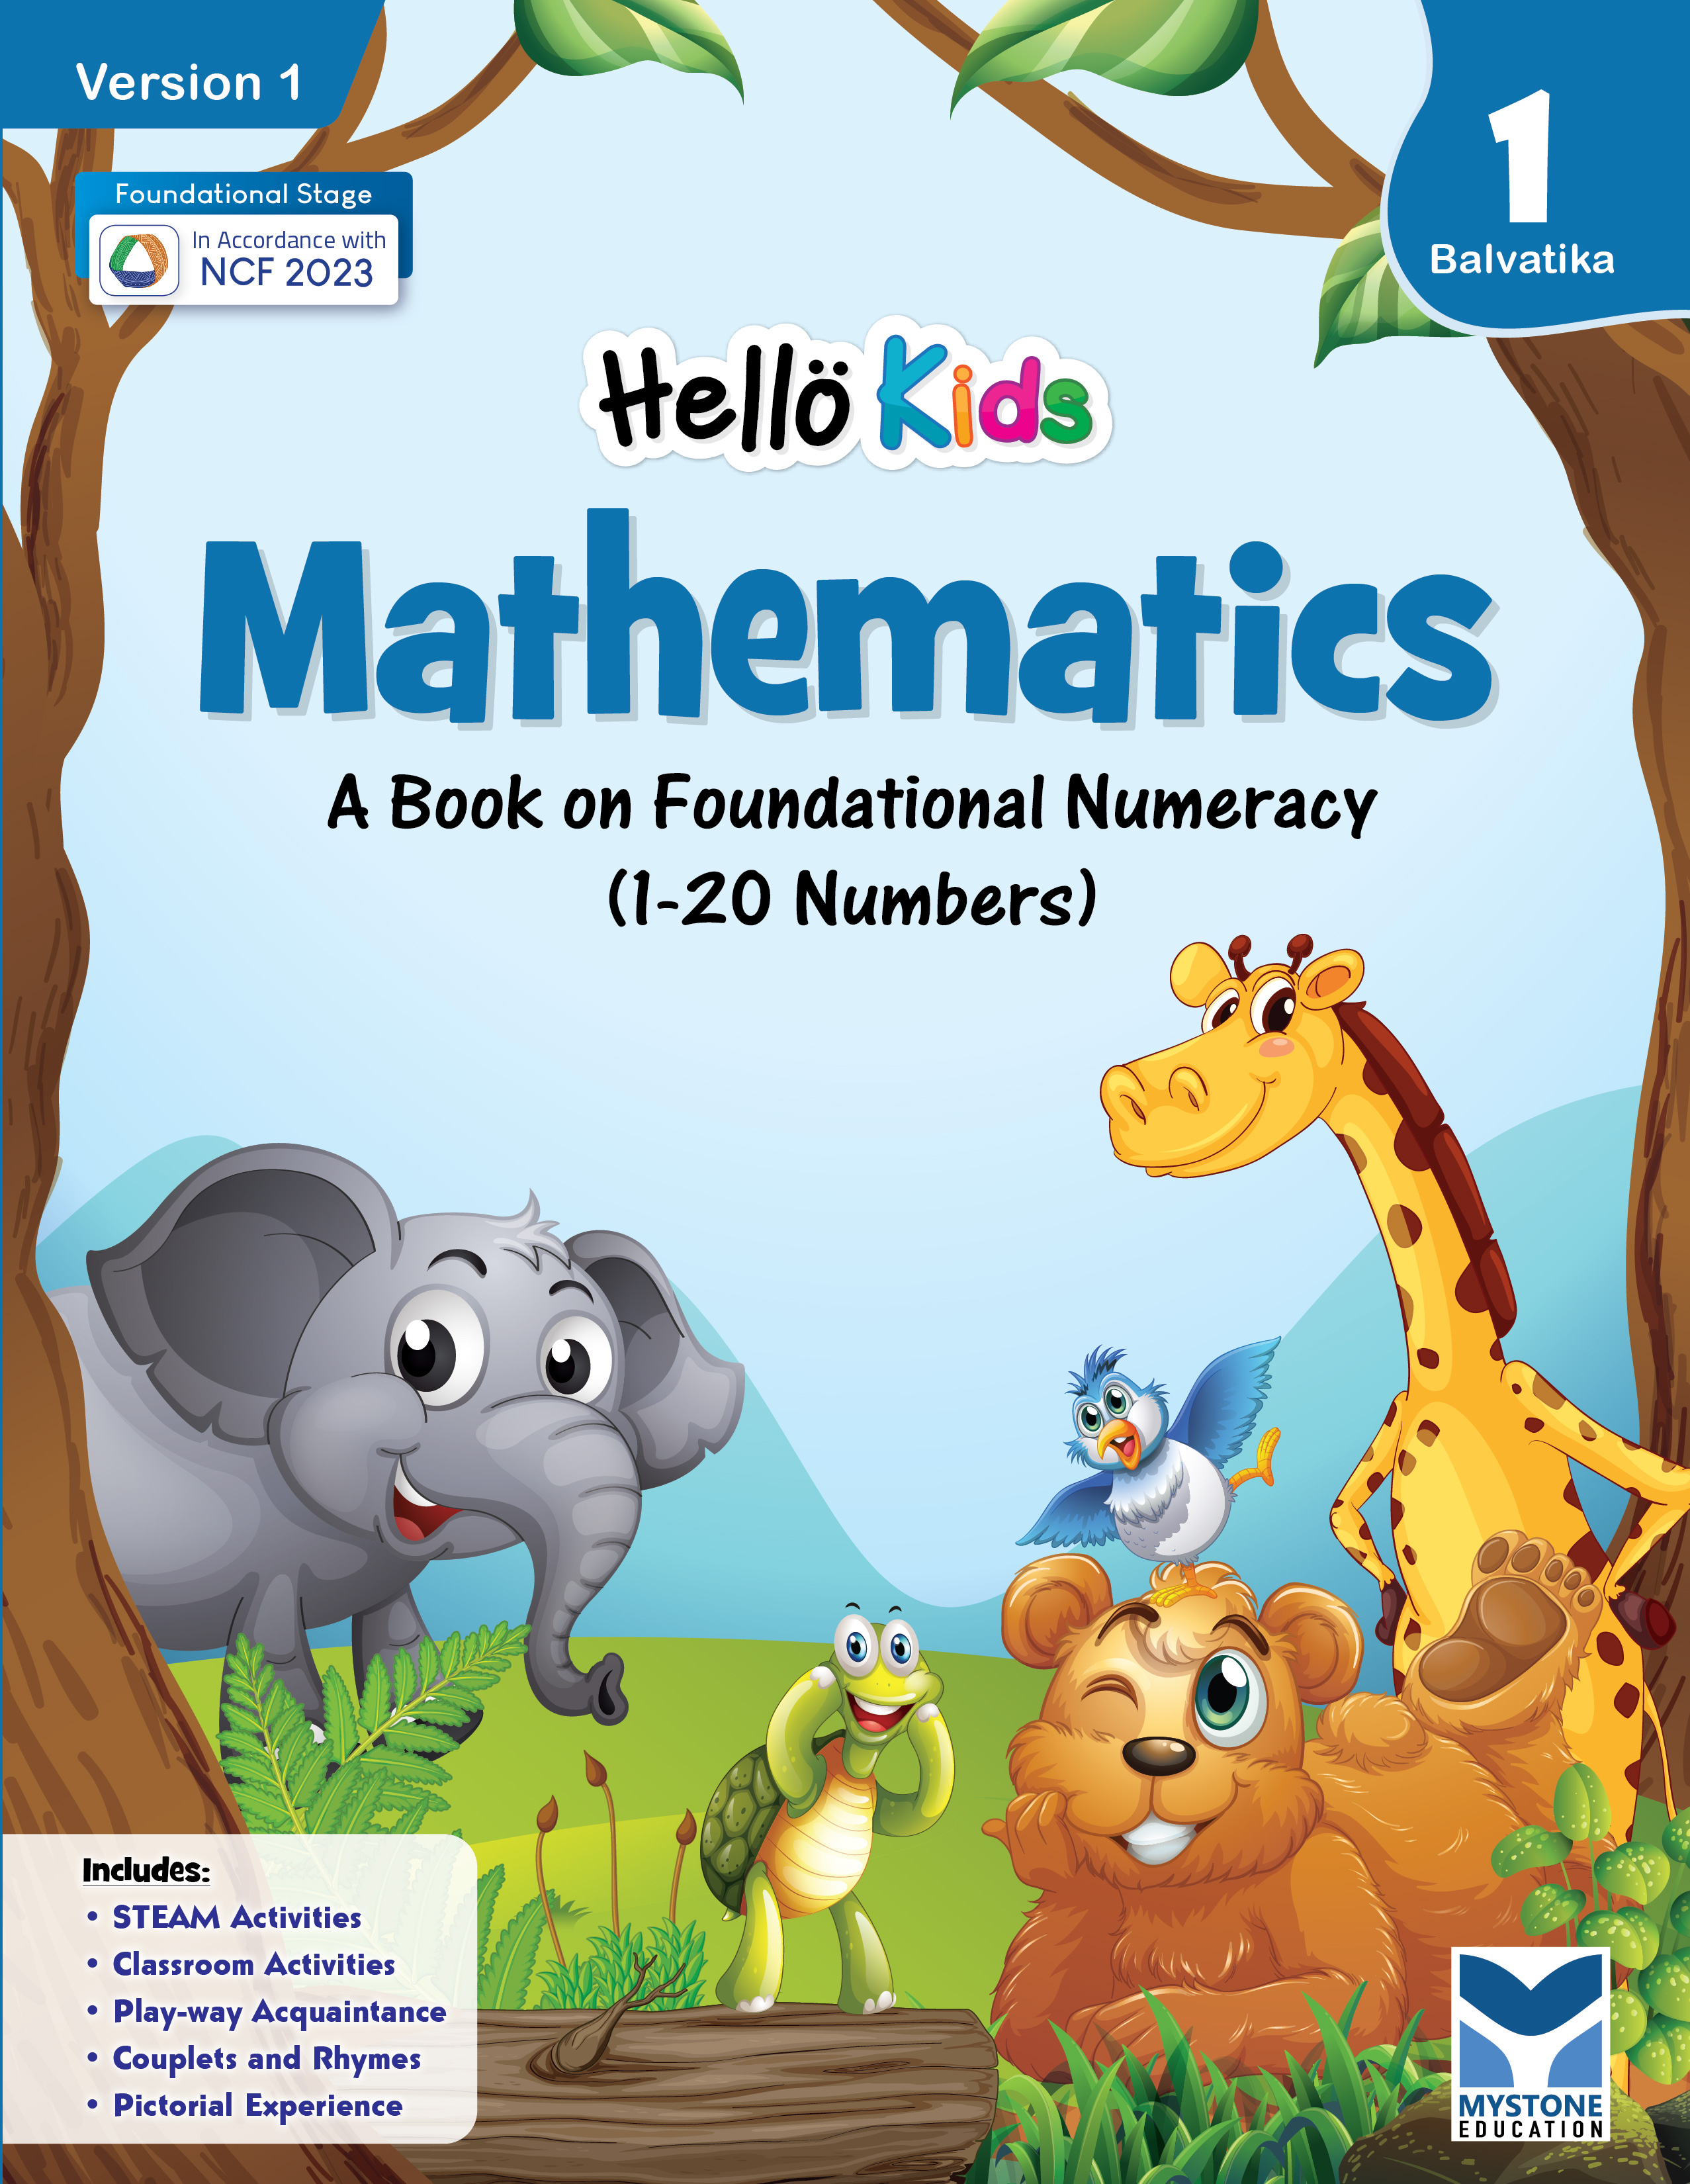 Hello Kids Mathematics Balvatika 1 Ver. 1